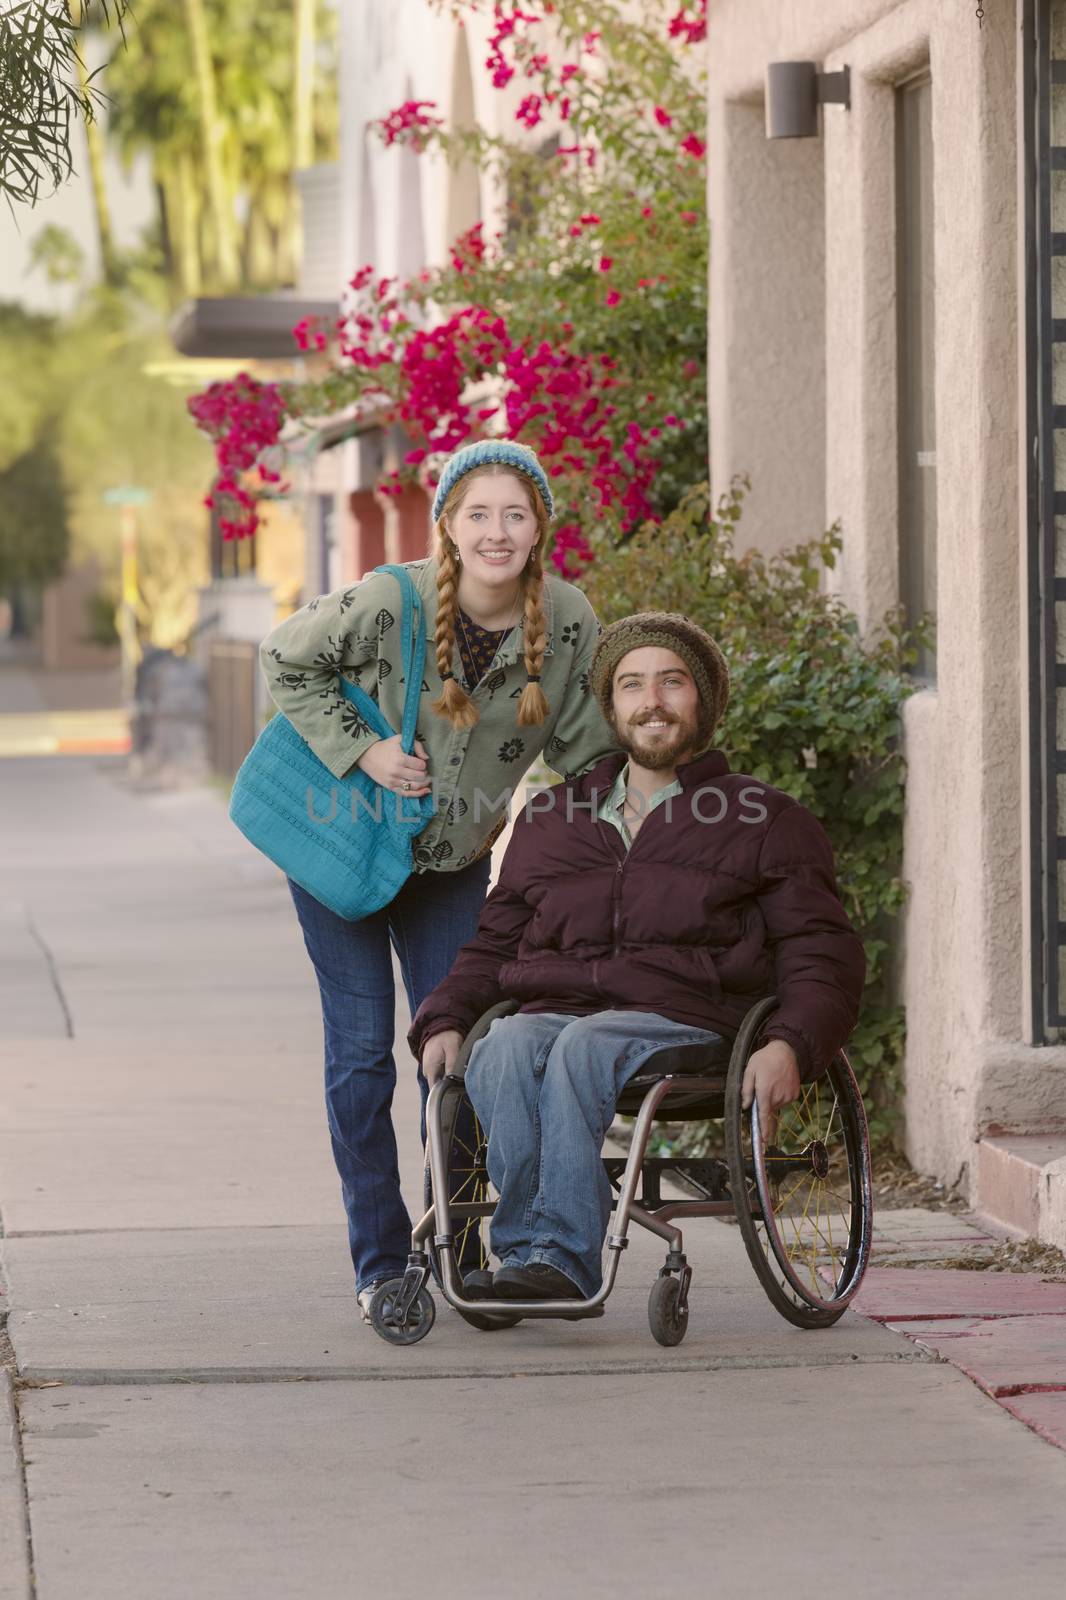 Woman with friend in wheelchair on city sidewalk